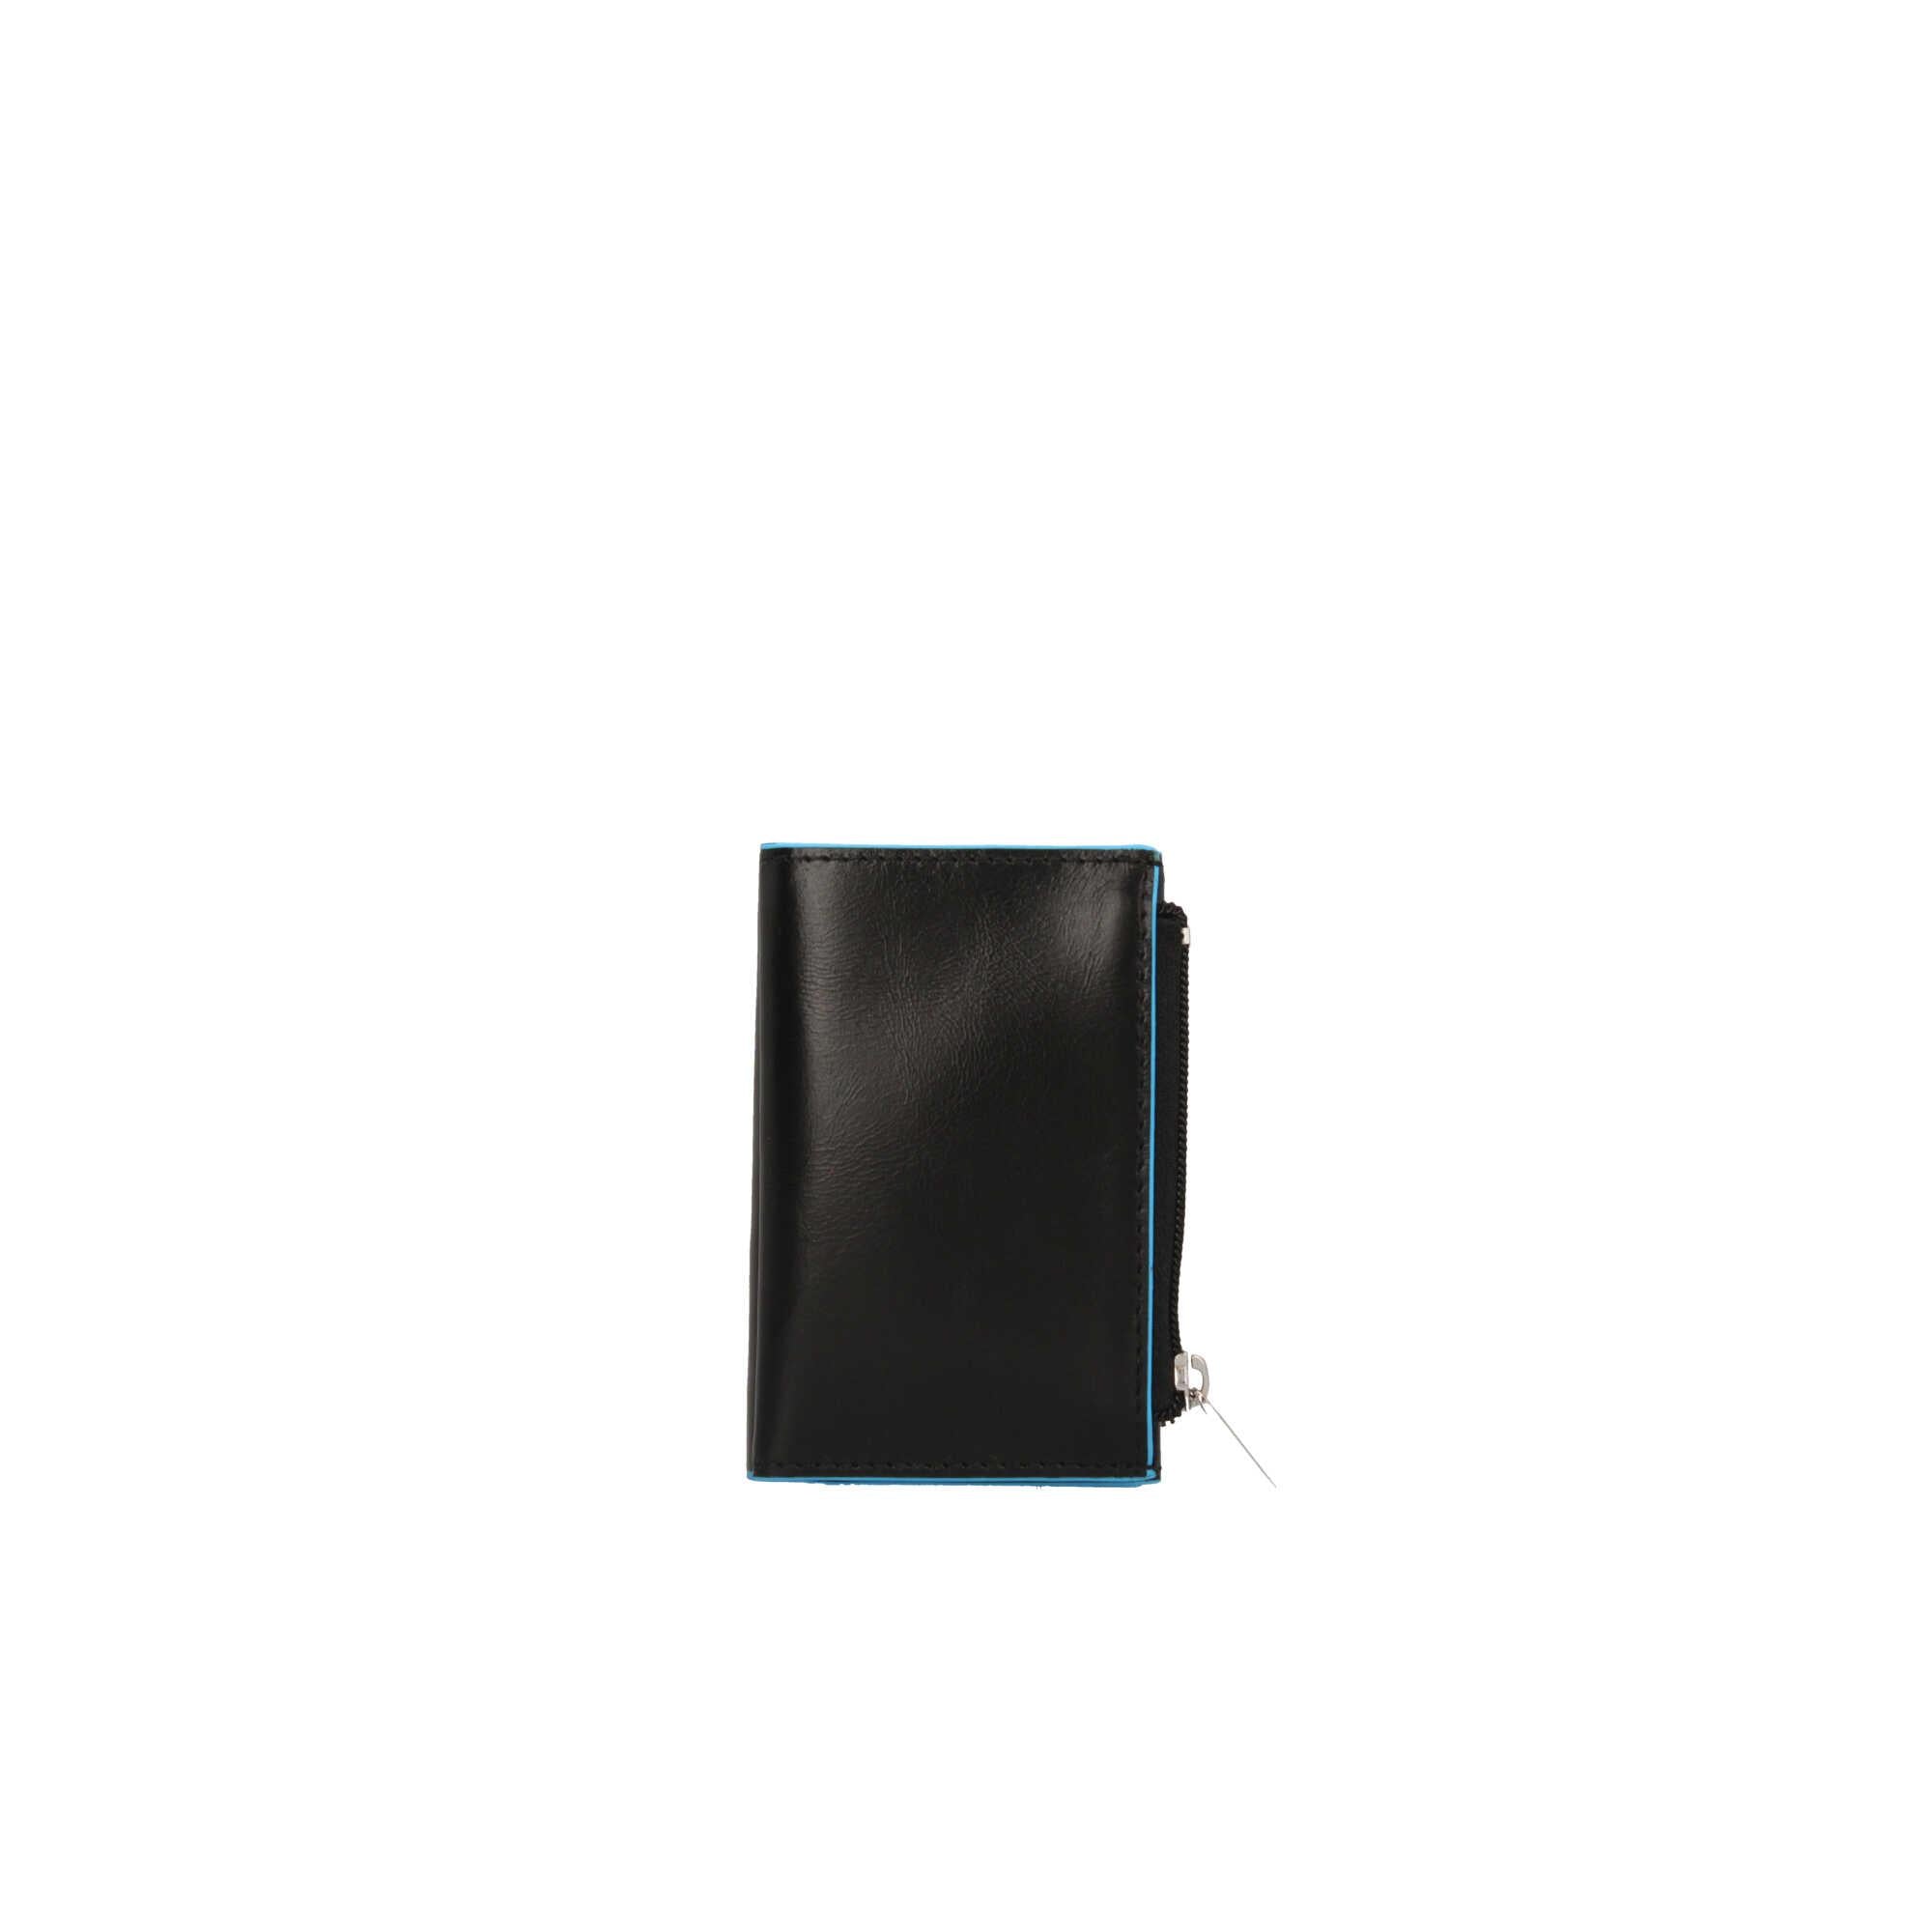 Compact wallet porta monete Piquadro con sliding system